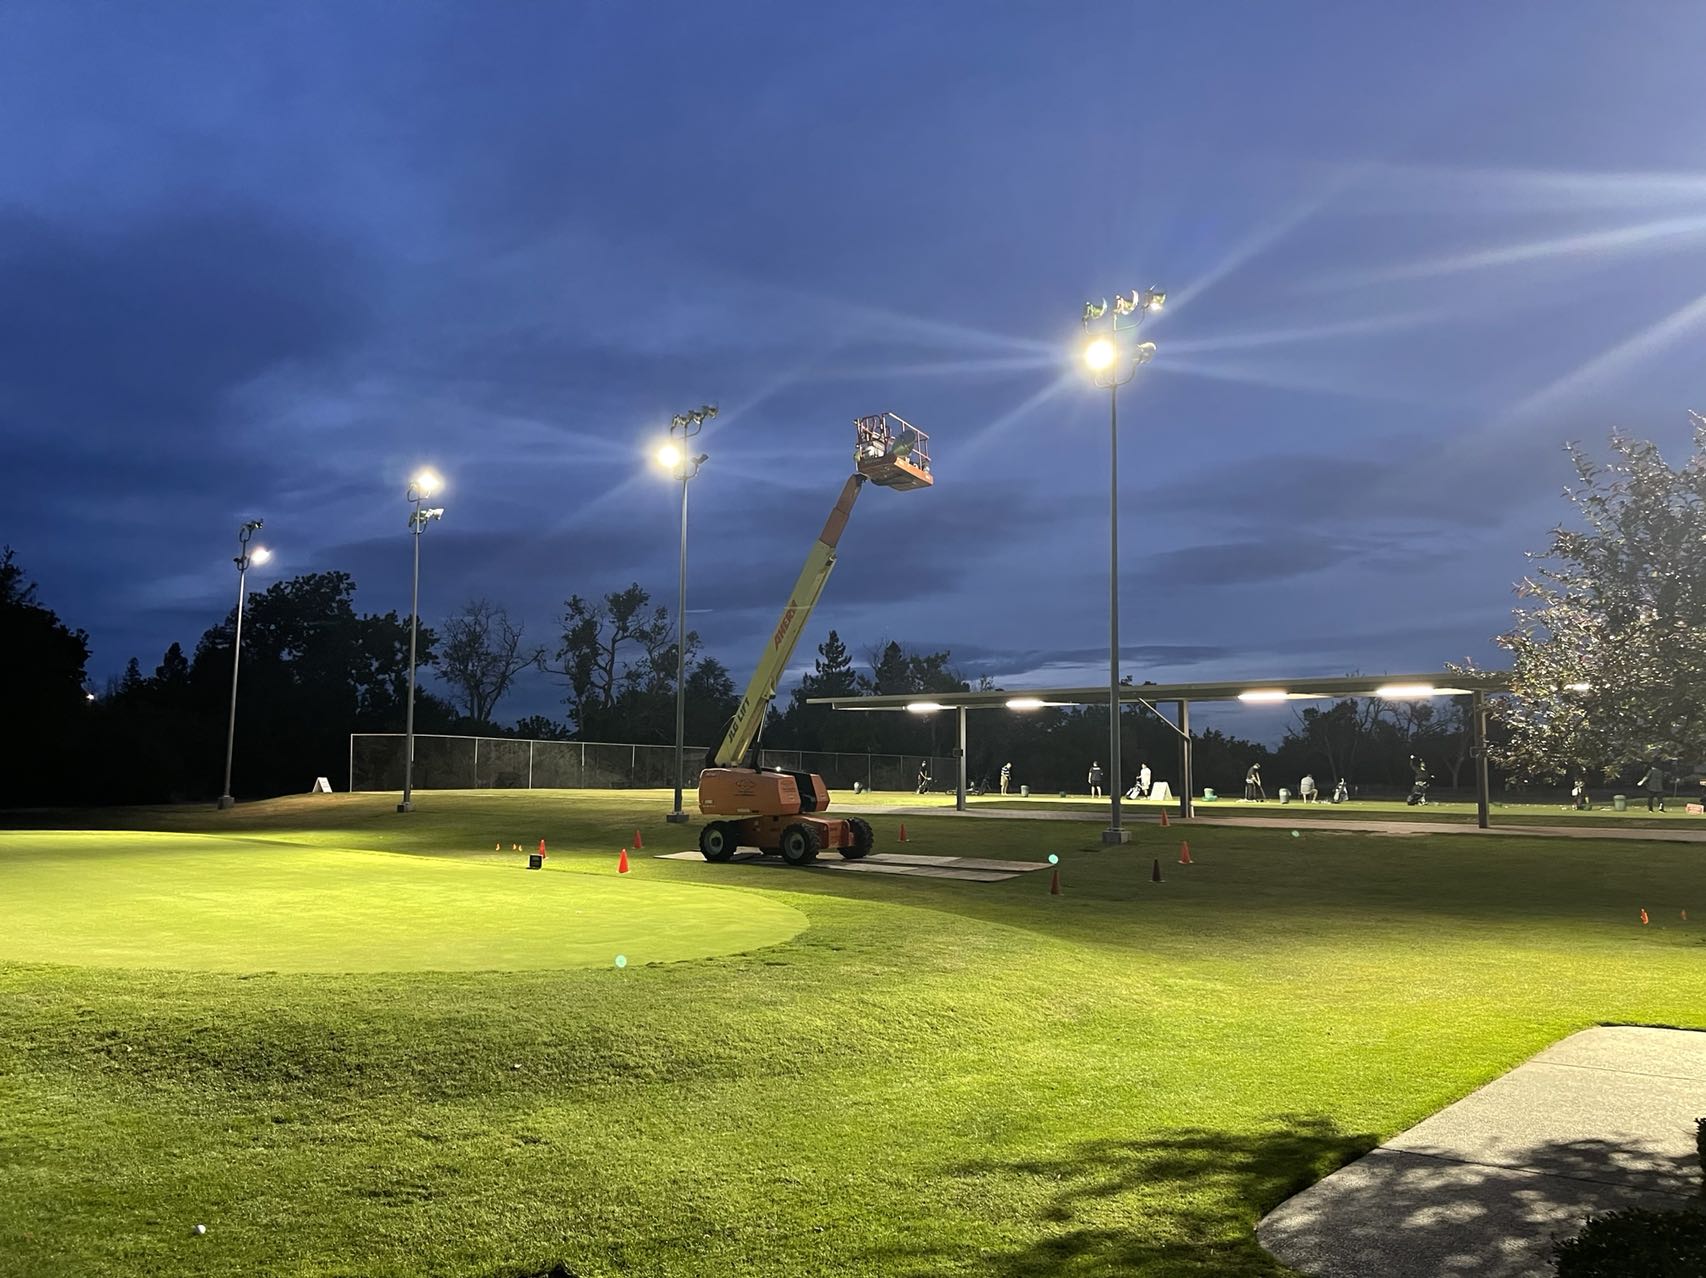 Pleasanton Golf Center Driving Range: LED Lighting project